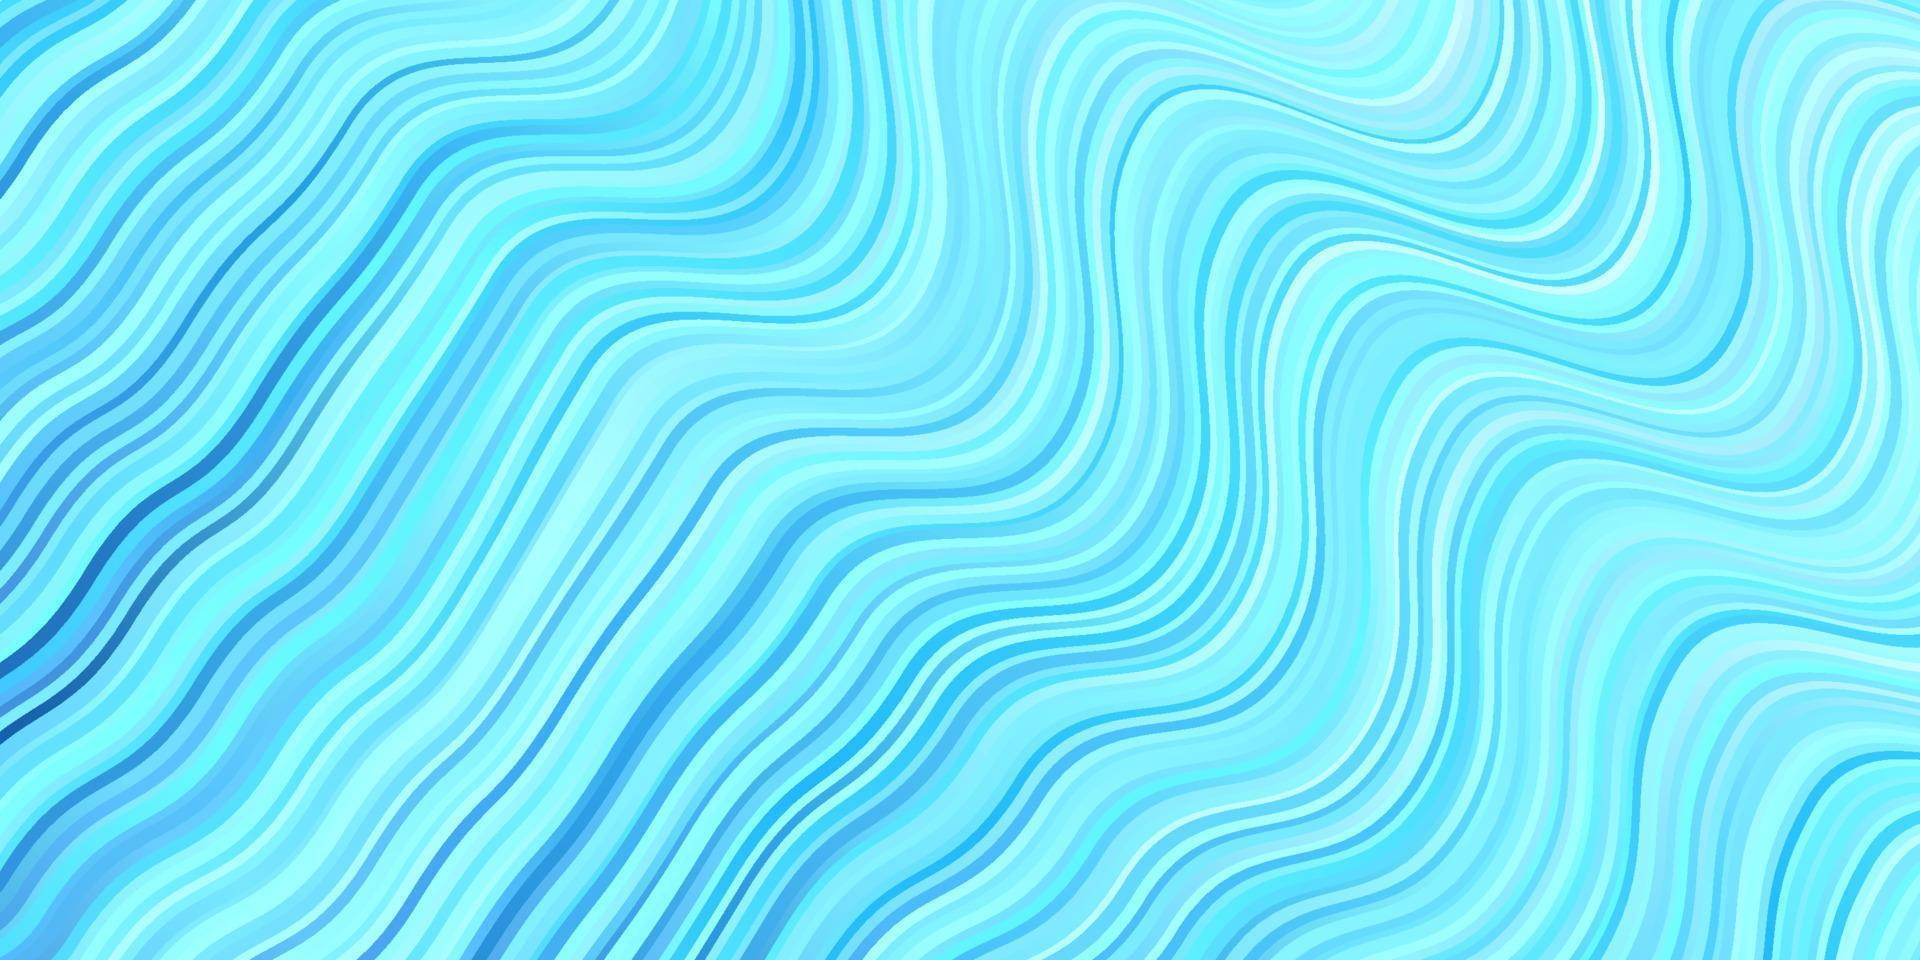 patrón de vector azul claro con líneas curvas.